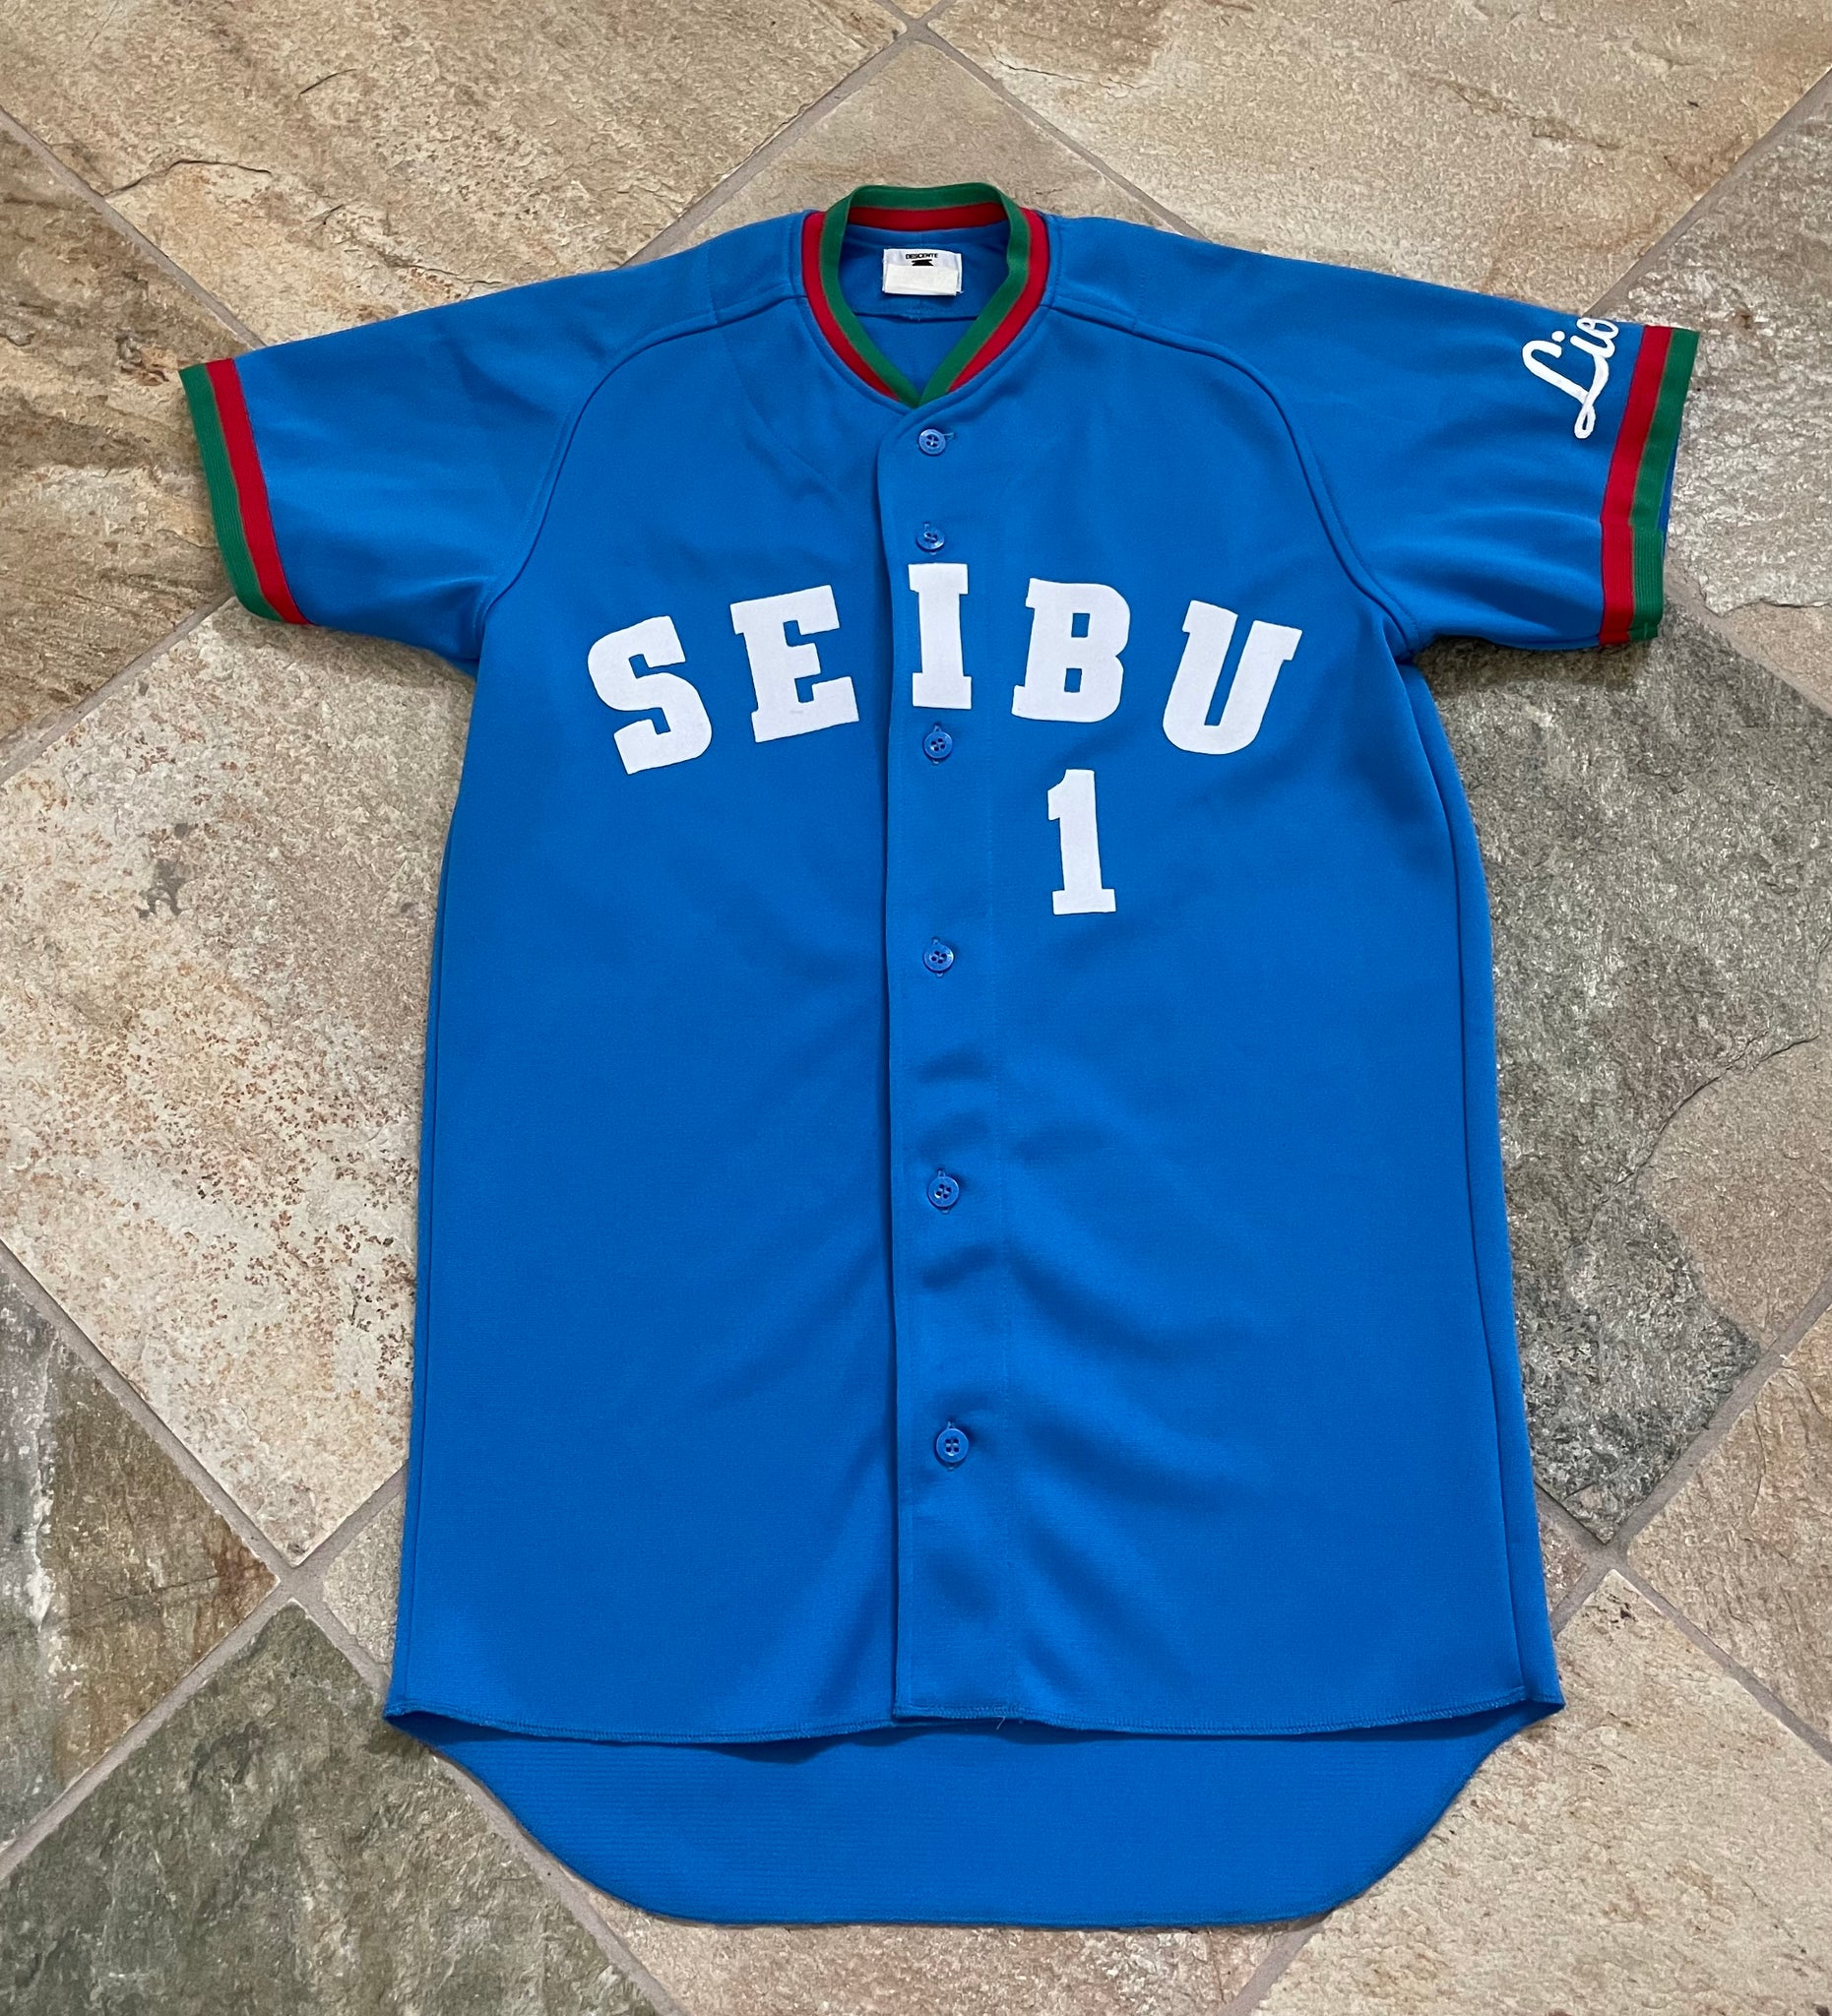  Baseball Jerseys 90s 80s Retro Shirts, Unisex Short